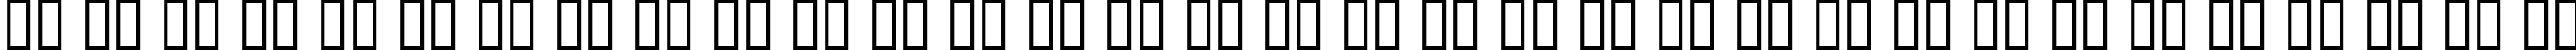 Пример написания русского алфавита шрифтом Alien Encounters Solid Italic